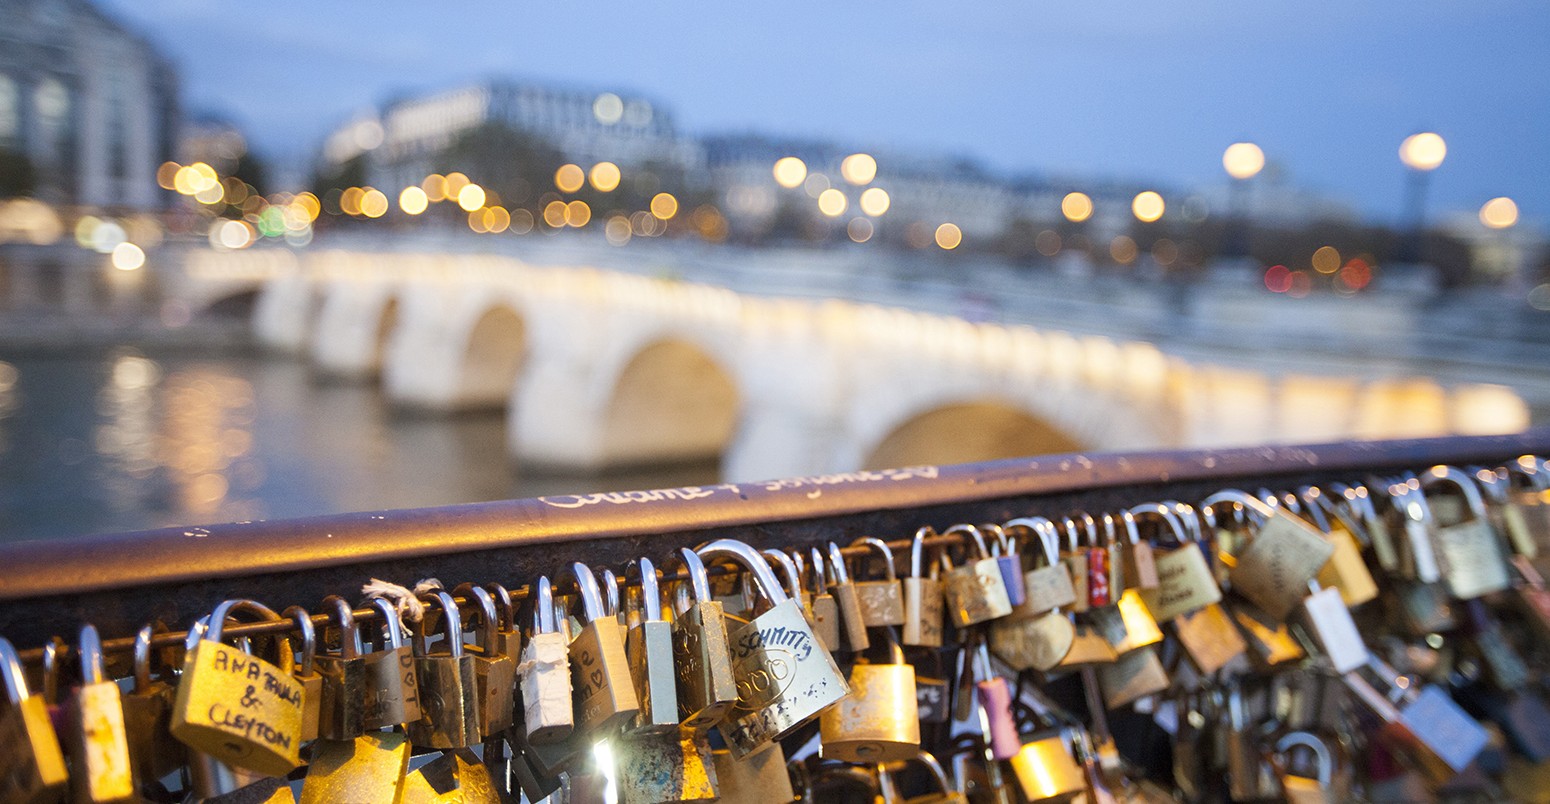 Love Locks on a bridge in Paris